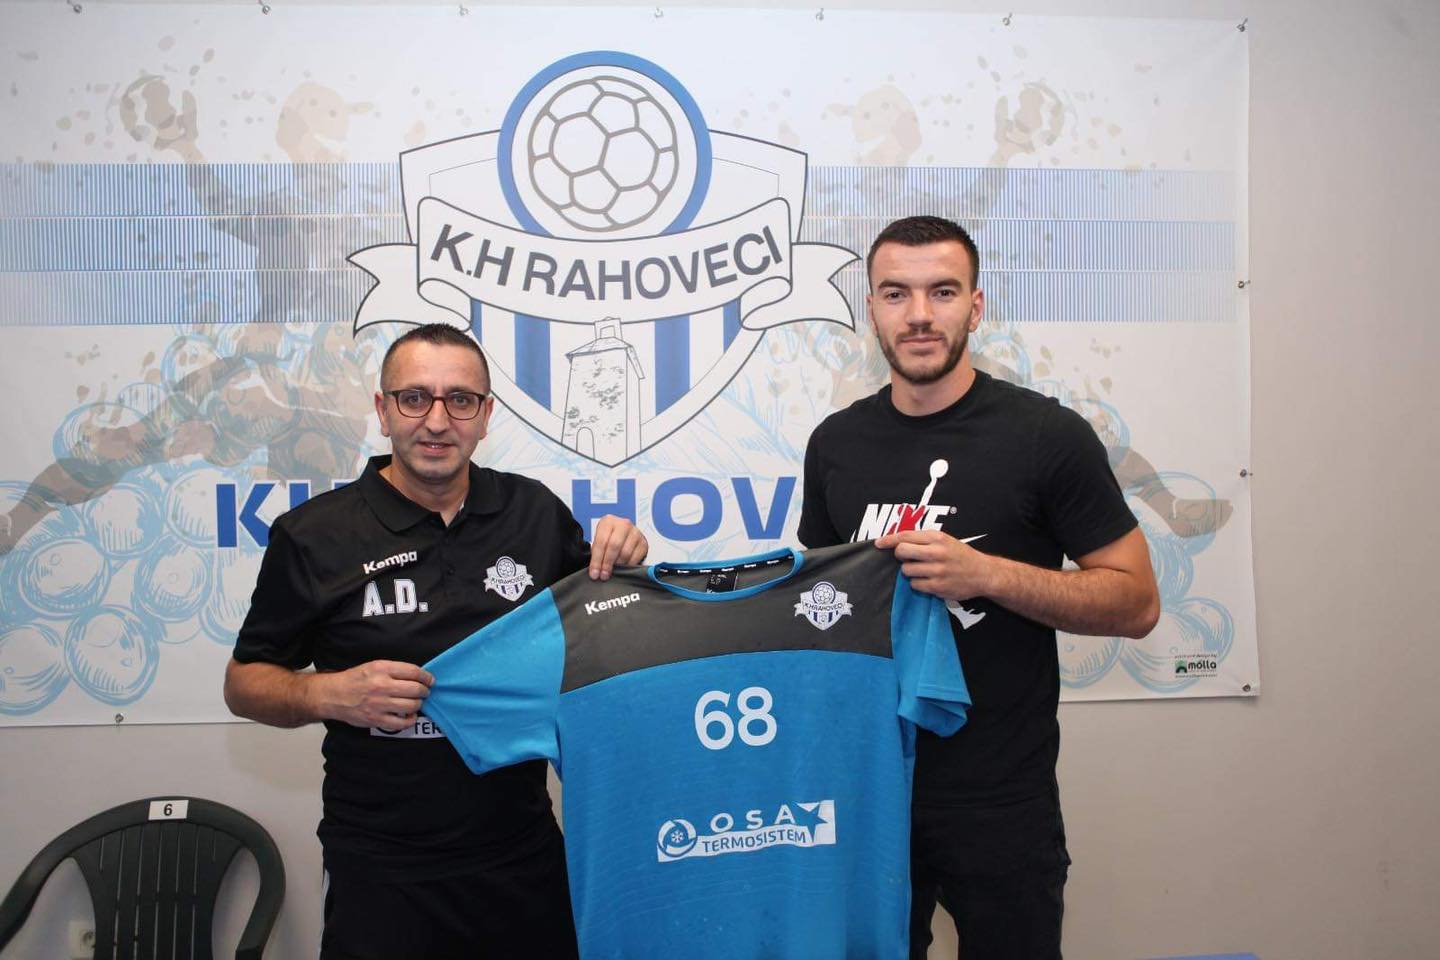 Rahovec signs with the best handball player in Kosovo - KOHA.net